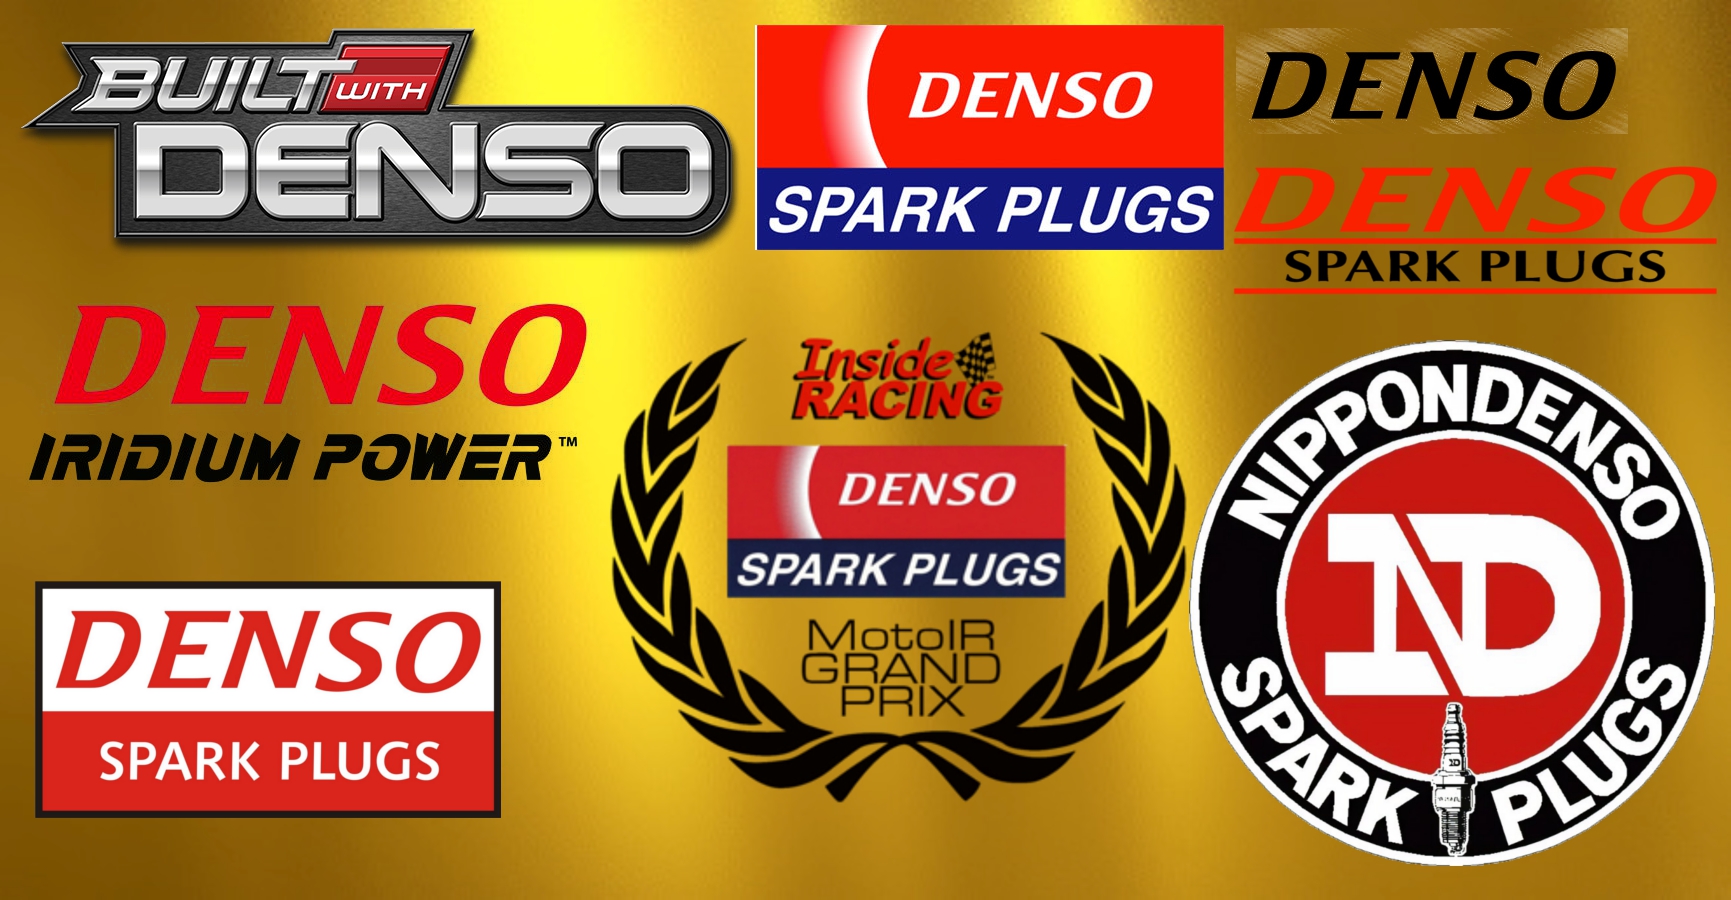 Denso Spark plug logos.jpg